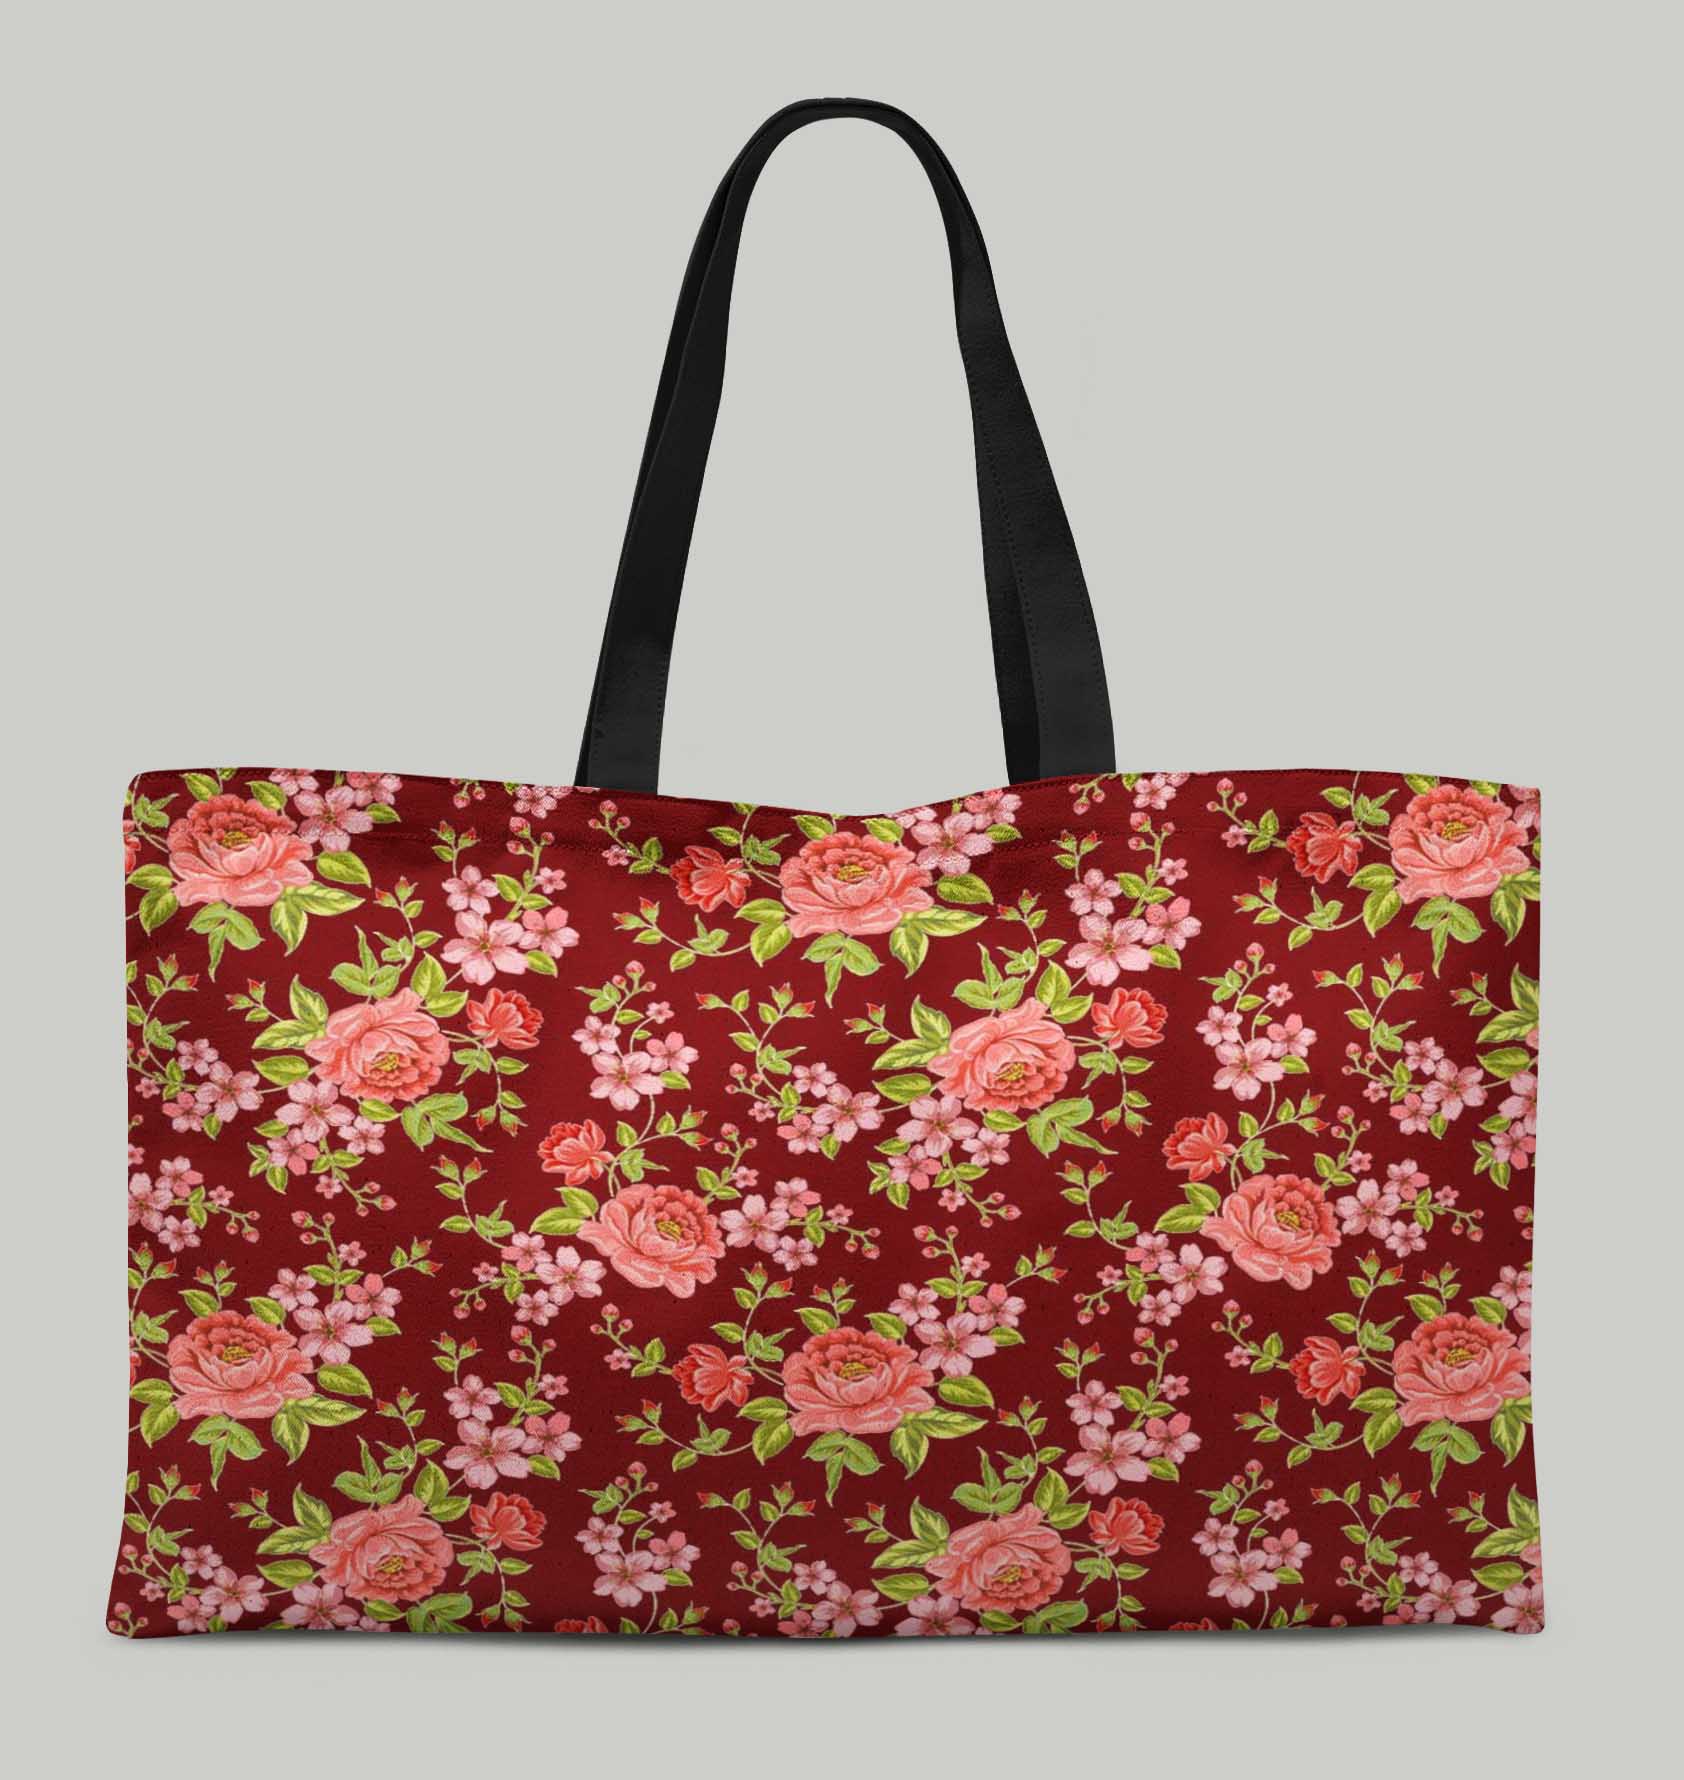 Details about   S4Sassy Floral Re-Usable Tote Bag  Women  Handbag Travel Shopping Bag FL-566F